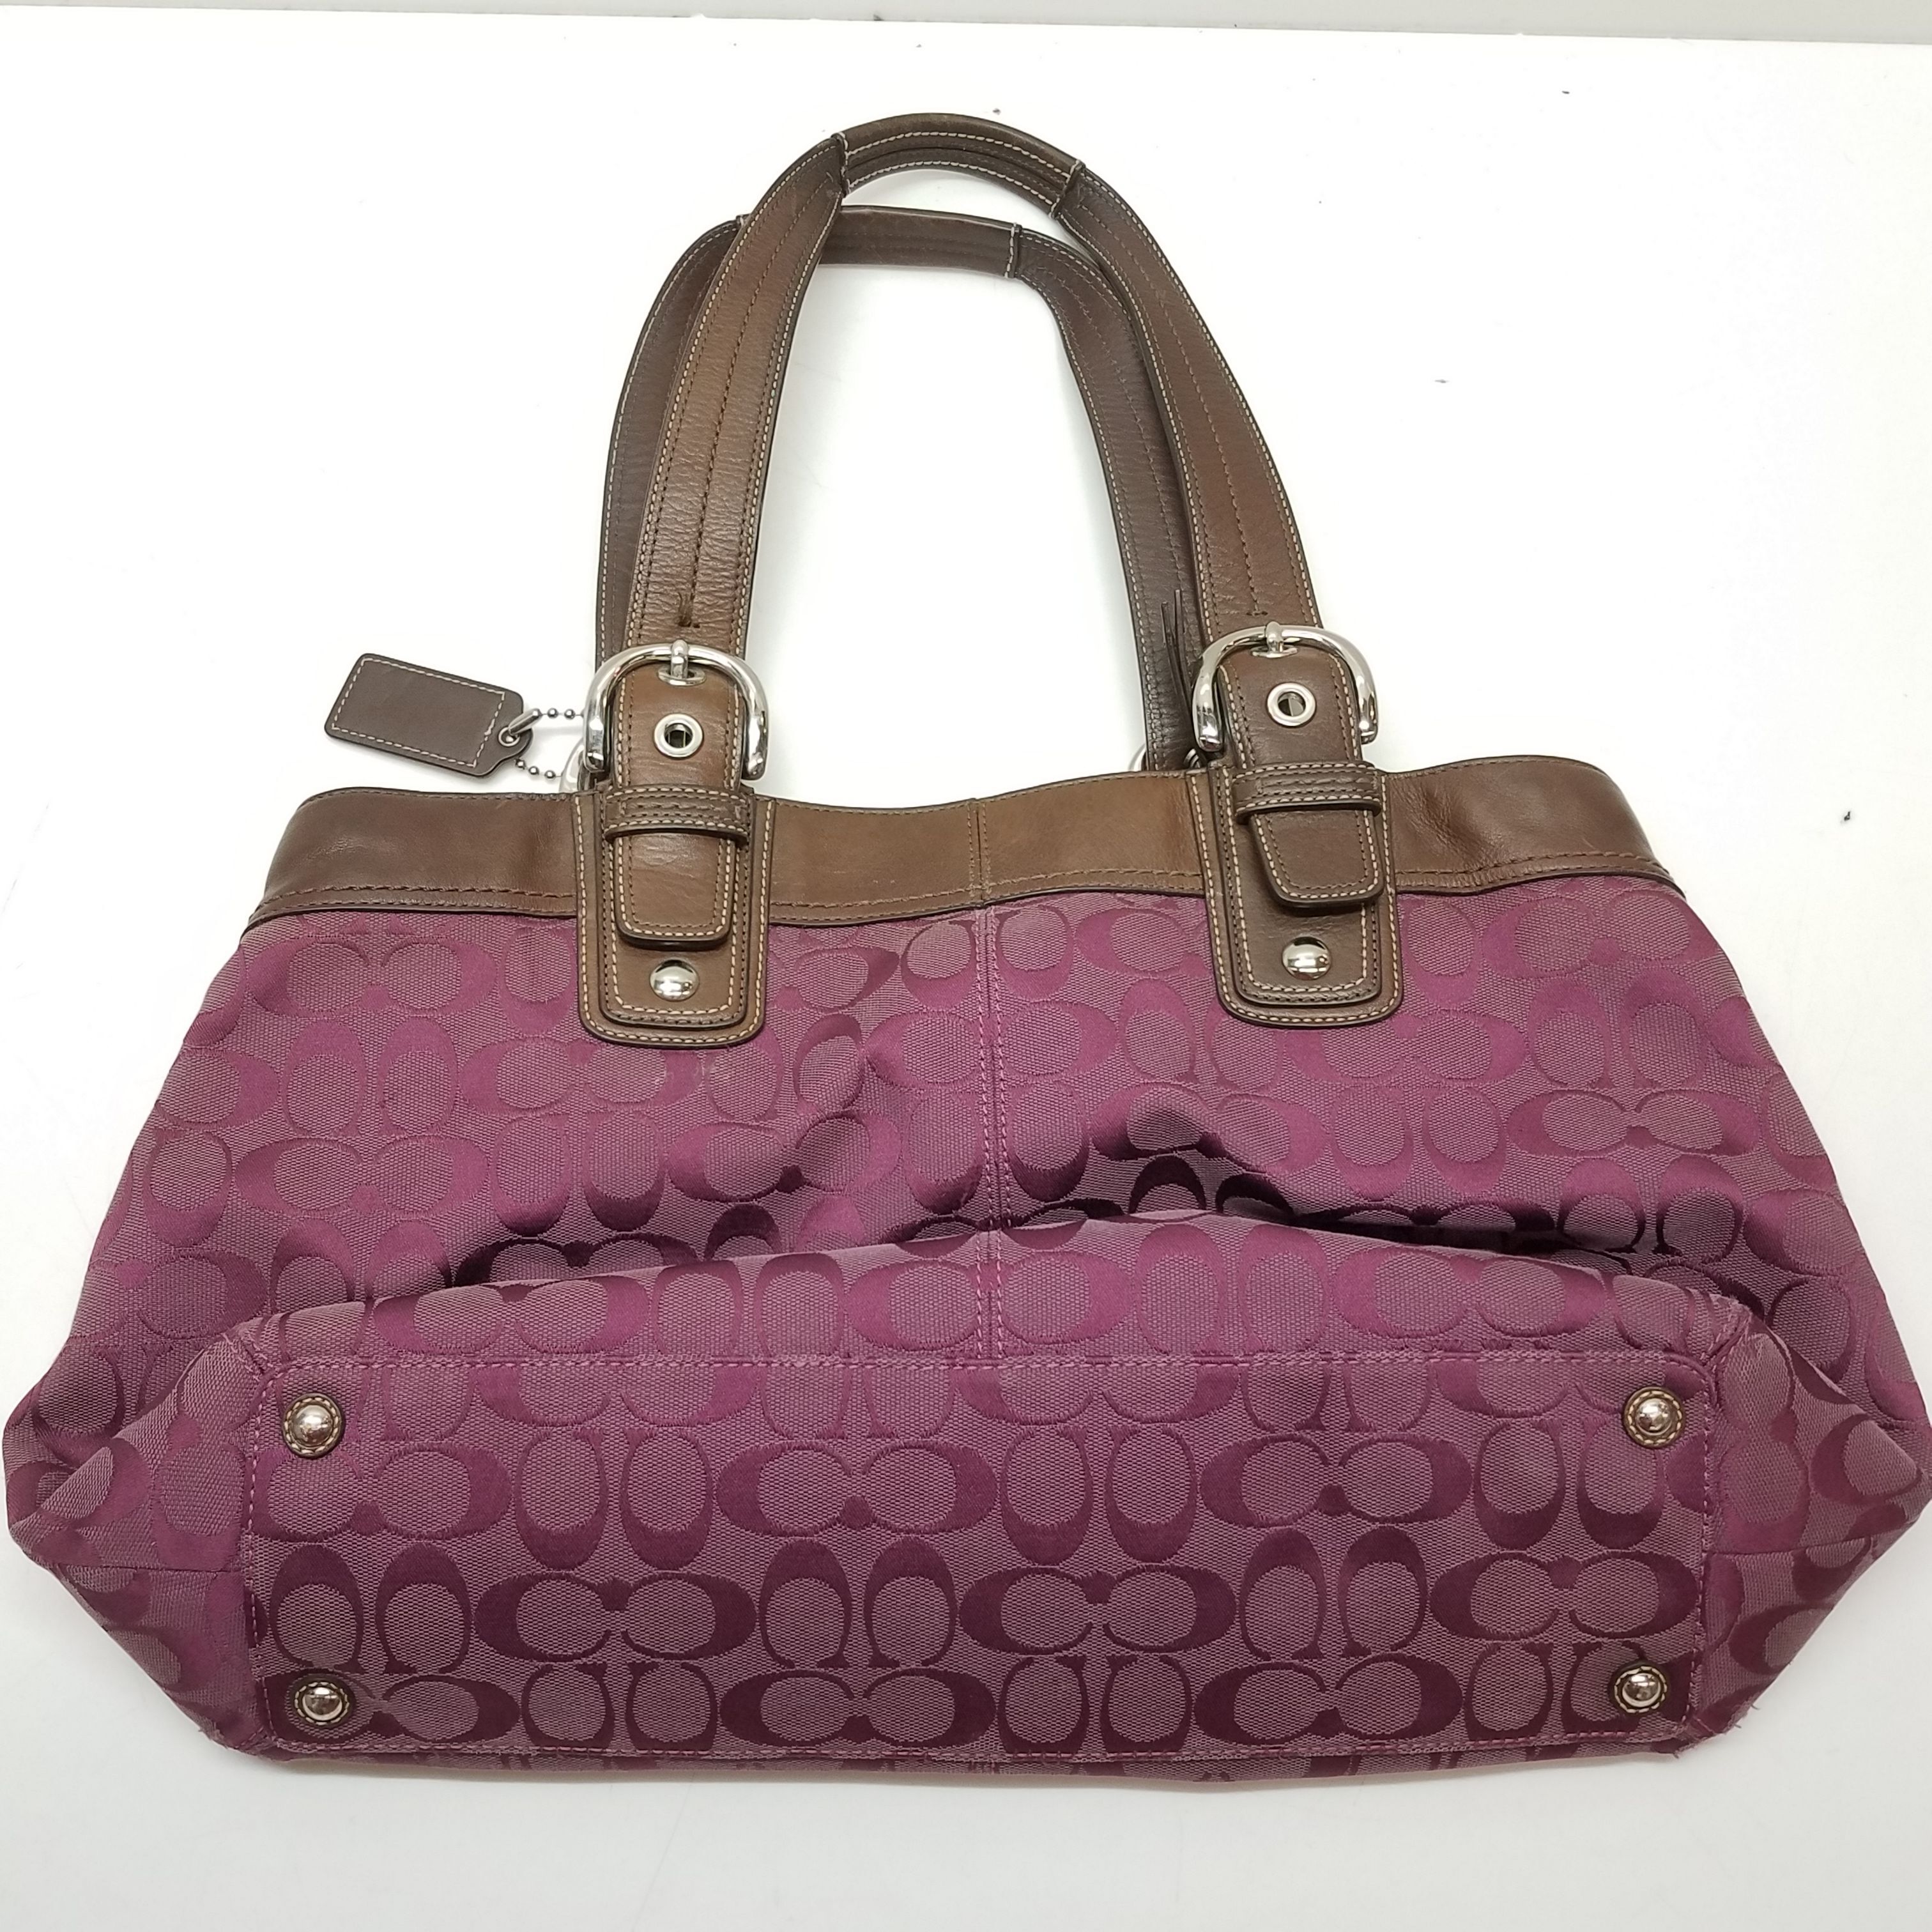 Purple coach handbag 💜 Accepting offers! #coach... - Depop